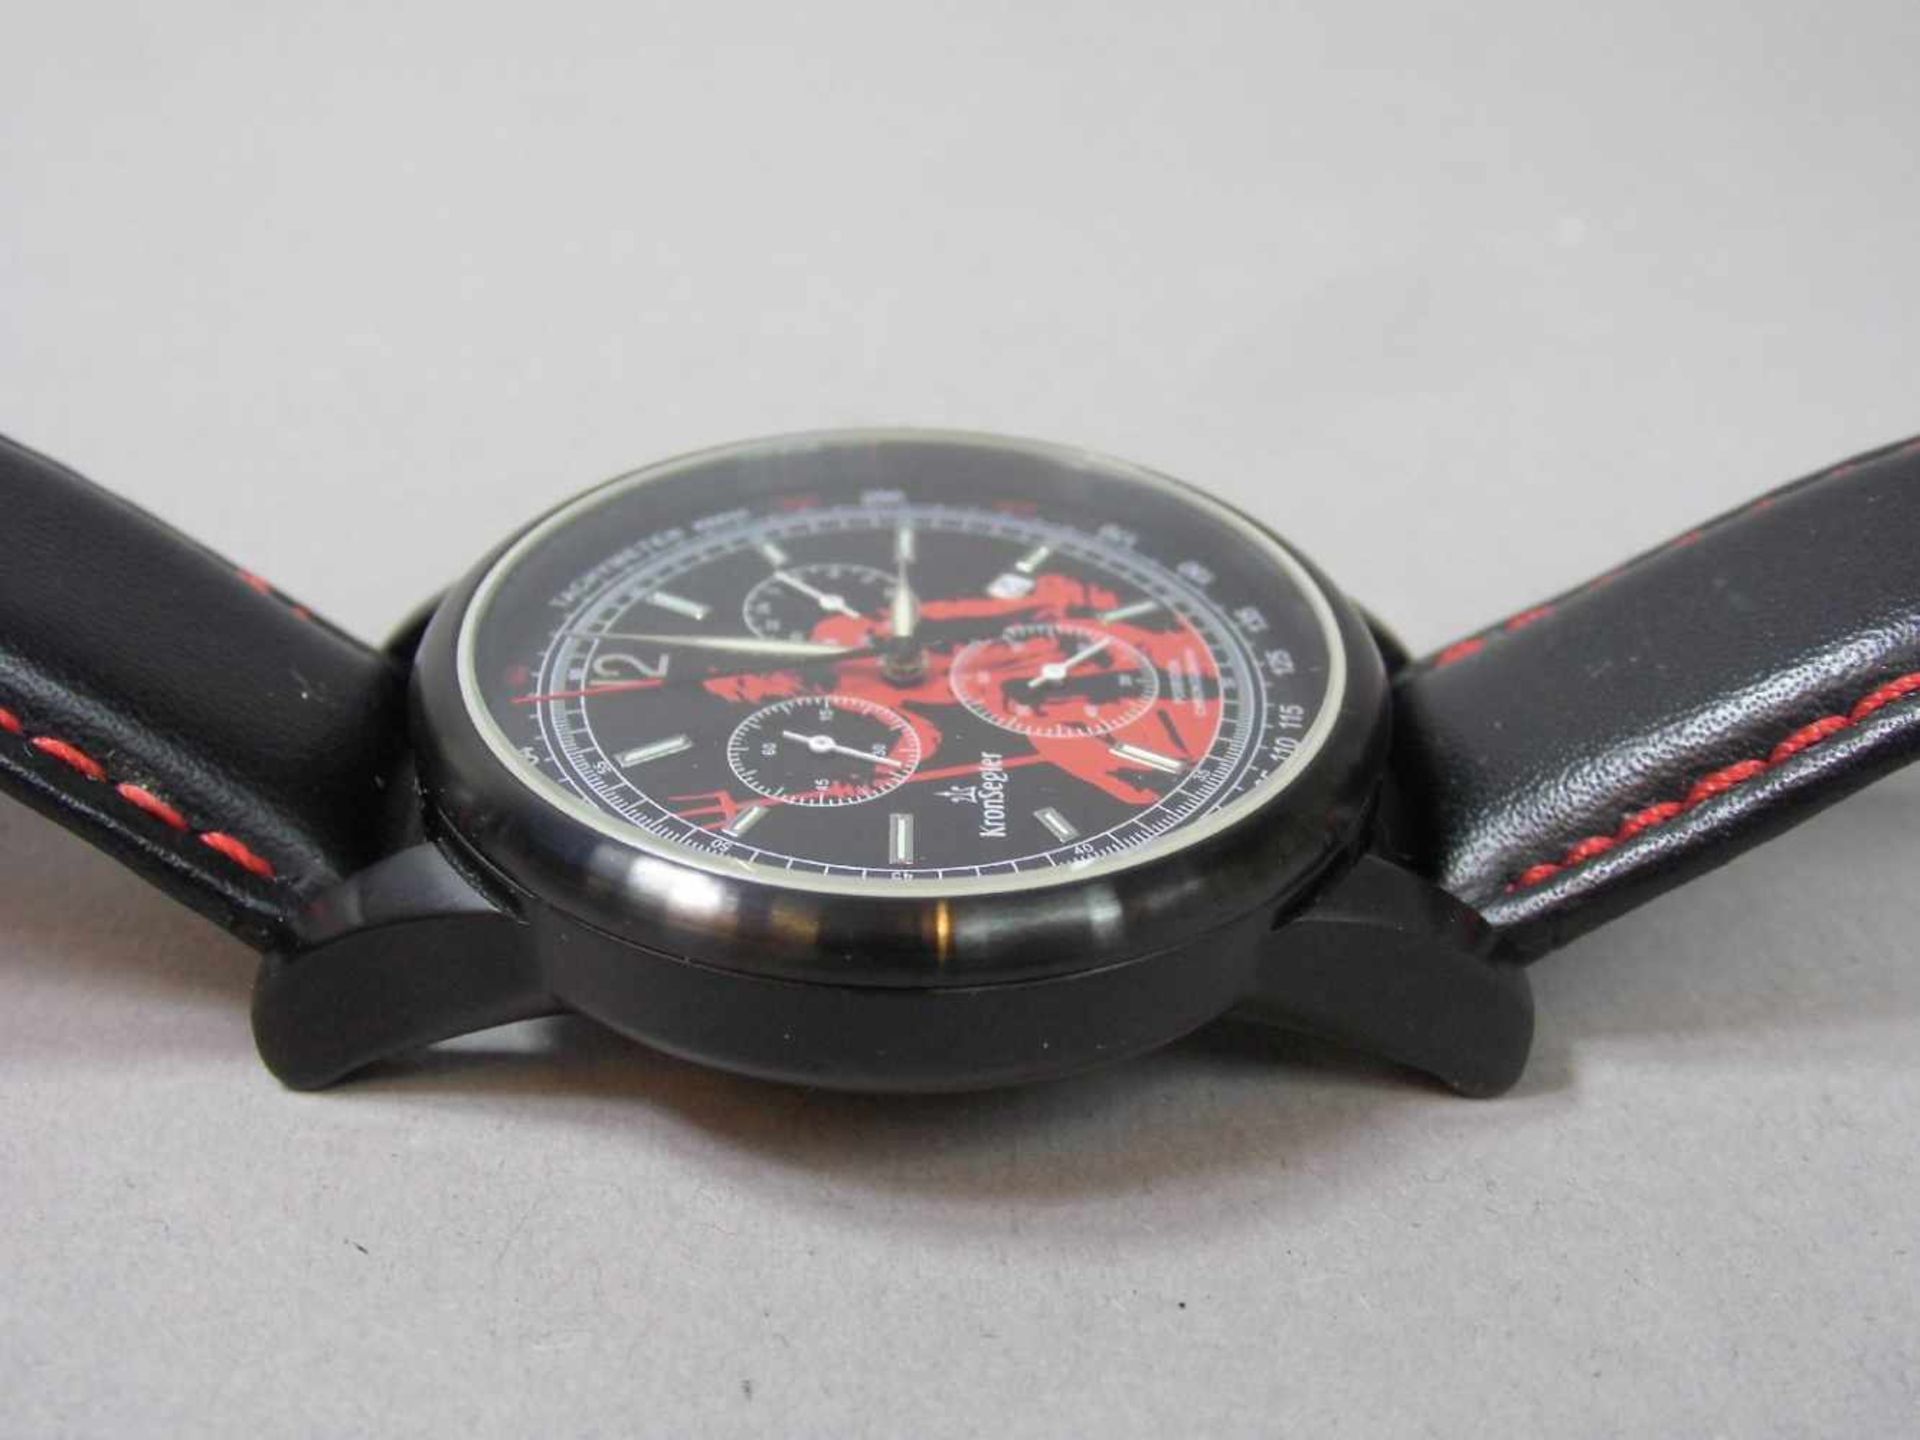 ARMBANDUHR / CHRONOGRAPH / wristwatch, Quartz-Uhr, Manufaktur Kronsegler GmbH / Glashütte - Sachsen, - Image 6 of 8